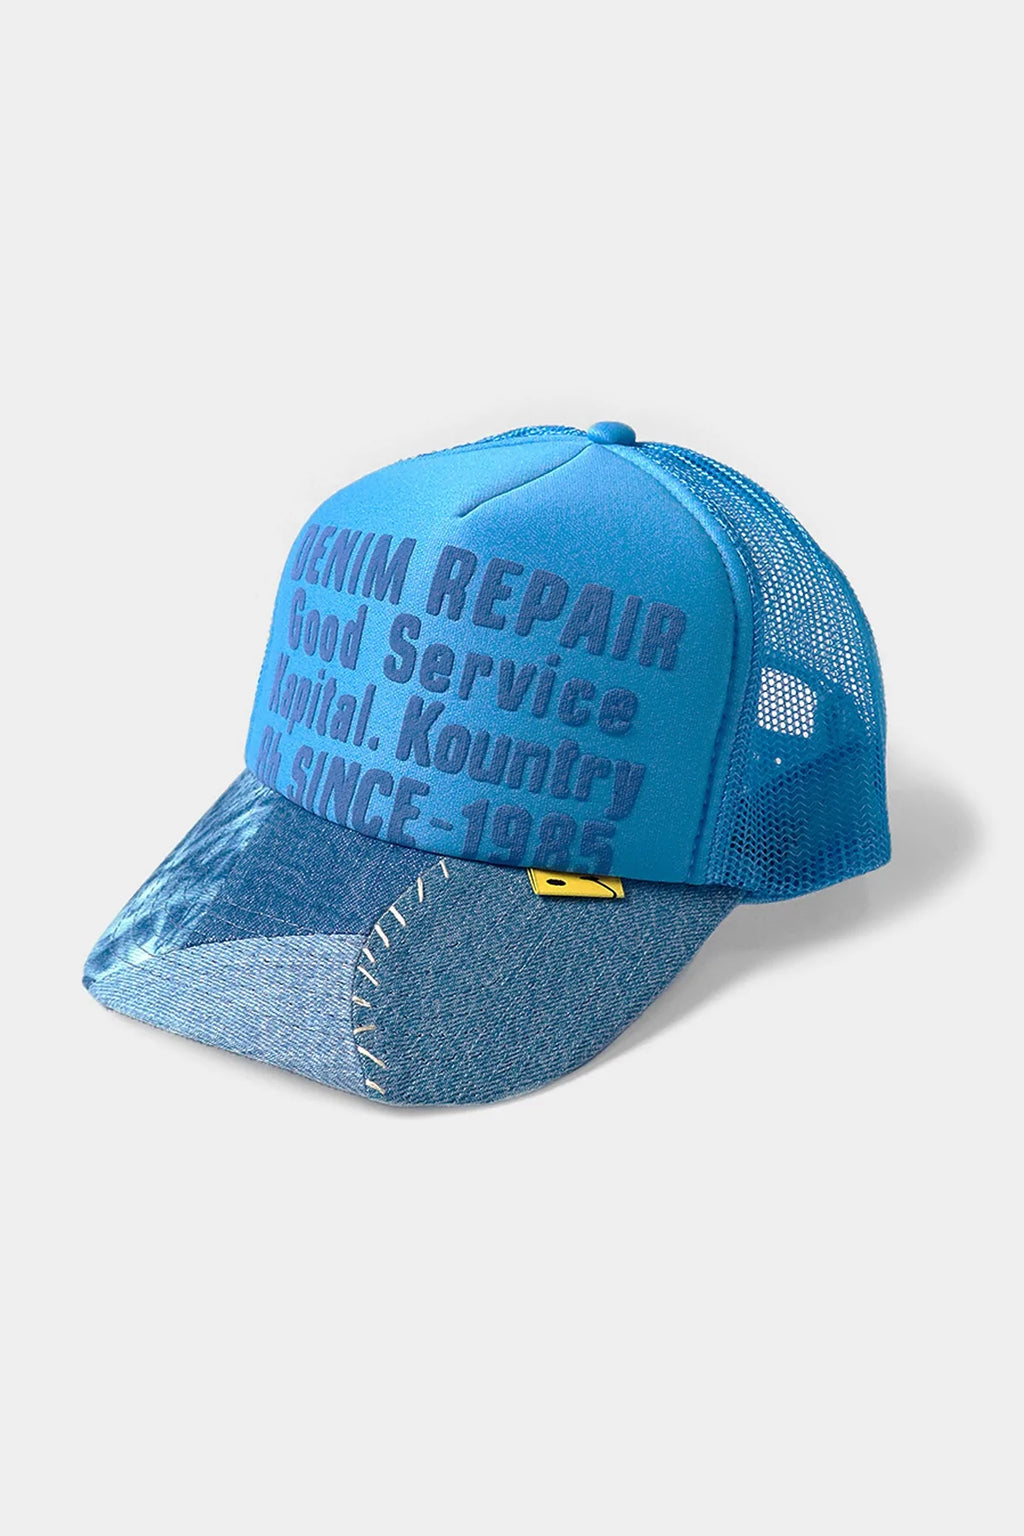 Kapital Denim Repair Service Denim Reconstruction Truck Cap - Turquoise